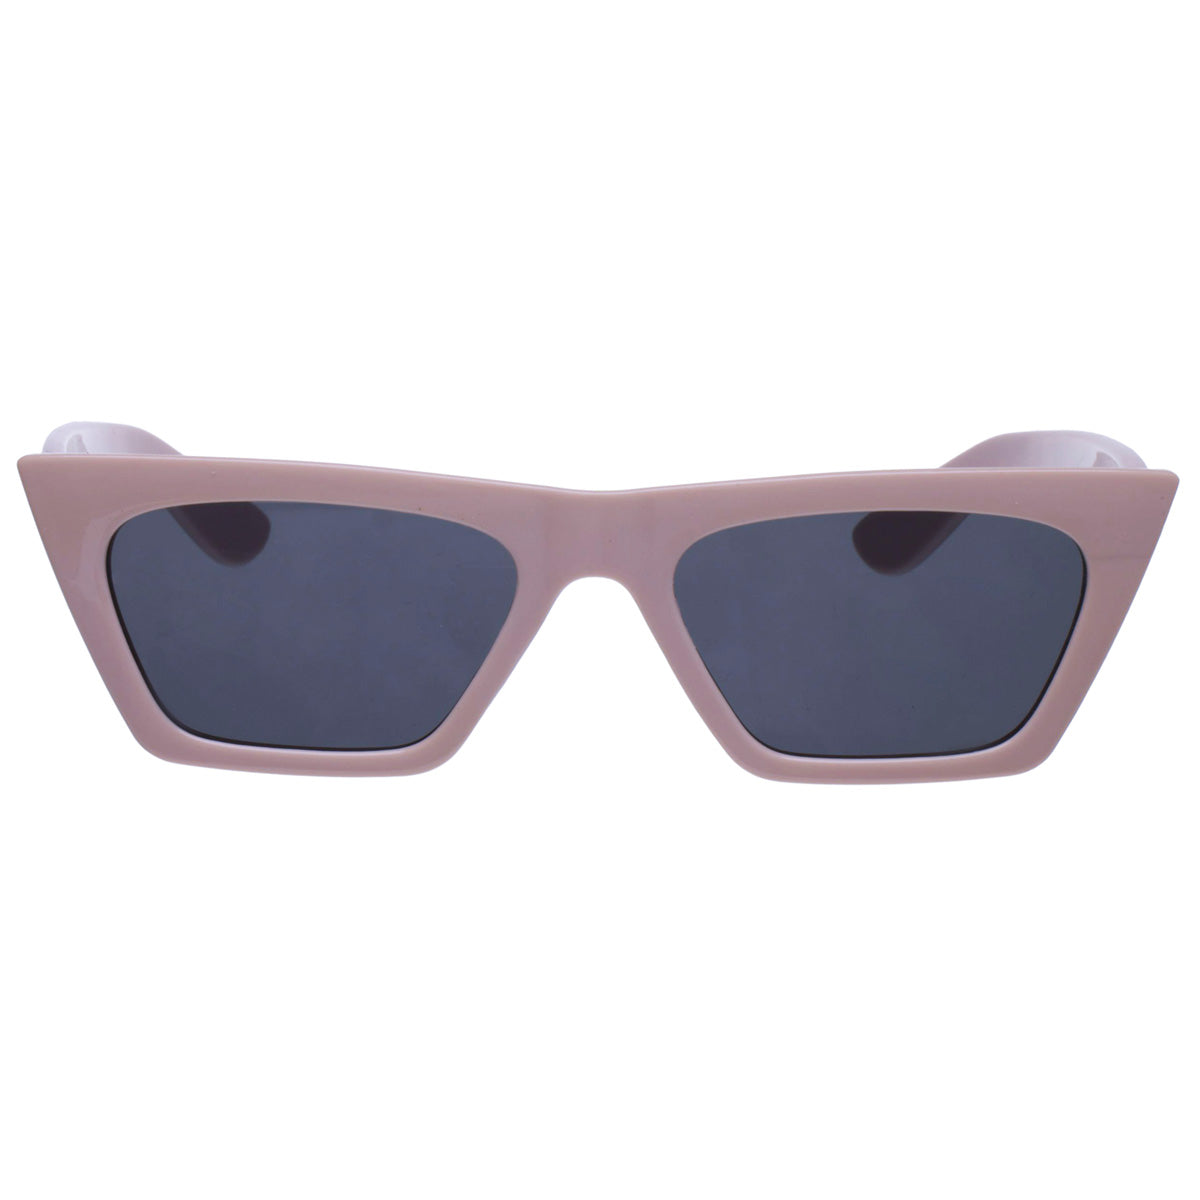 Cat angled sunglasses